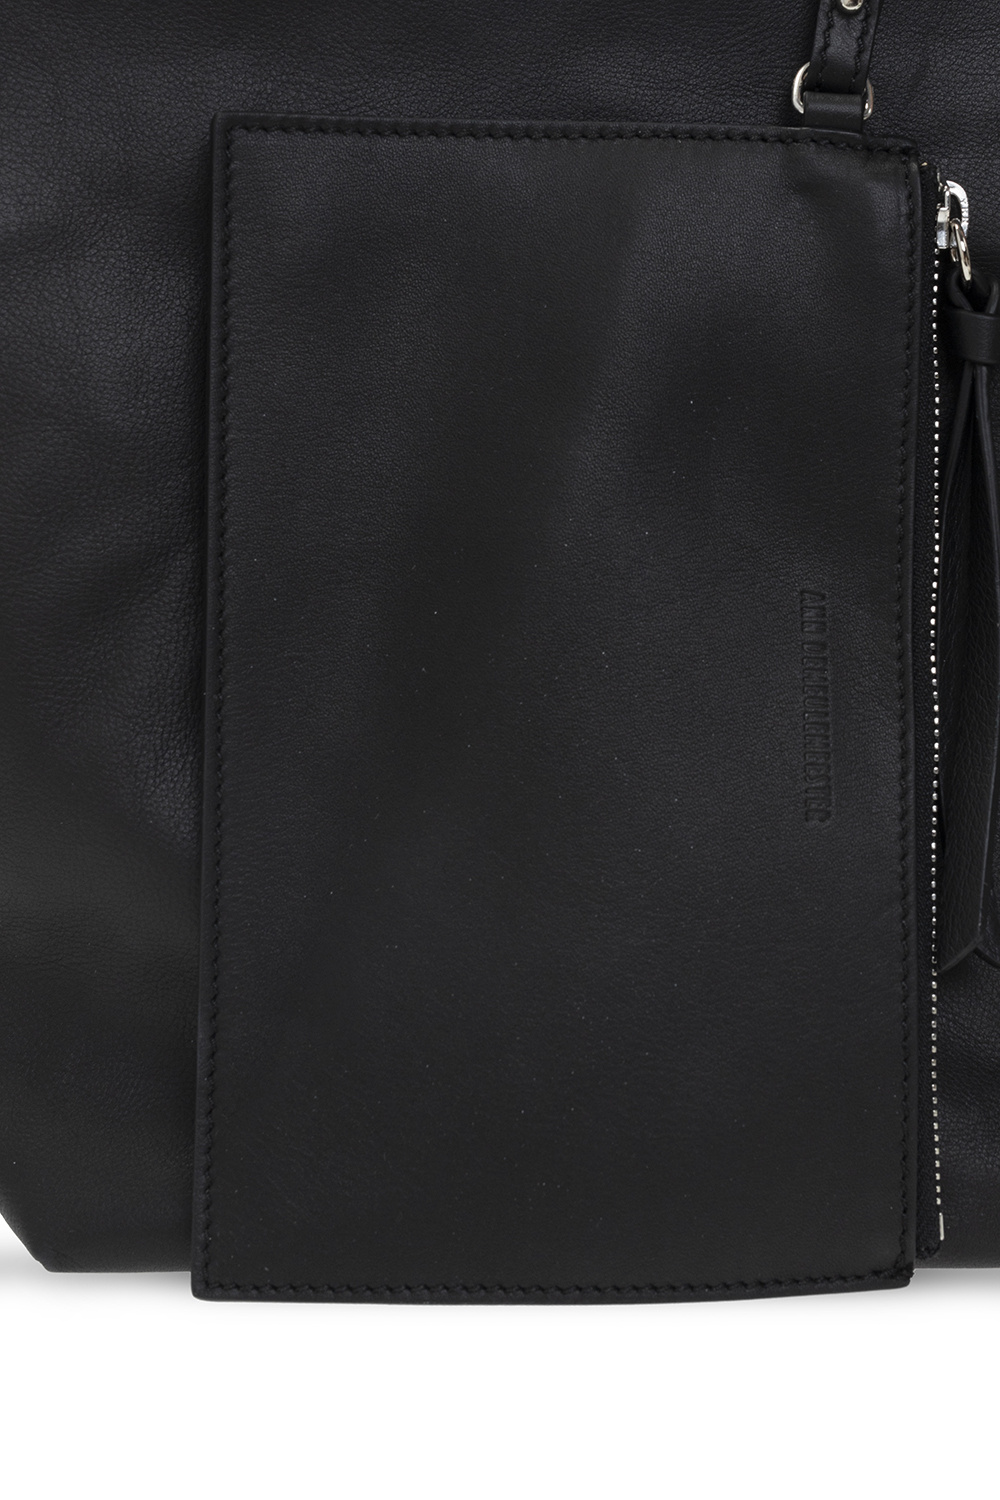 Square Shoulder Bags for Women in black color